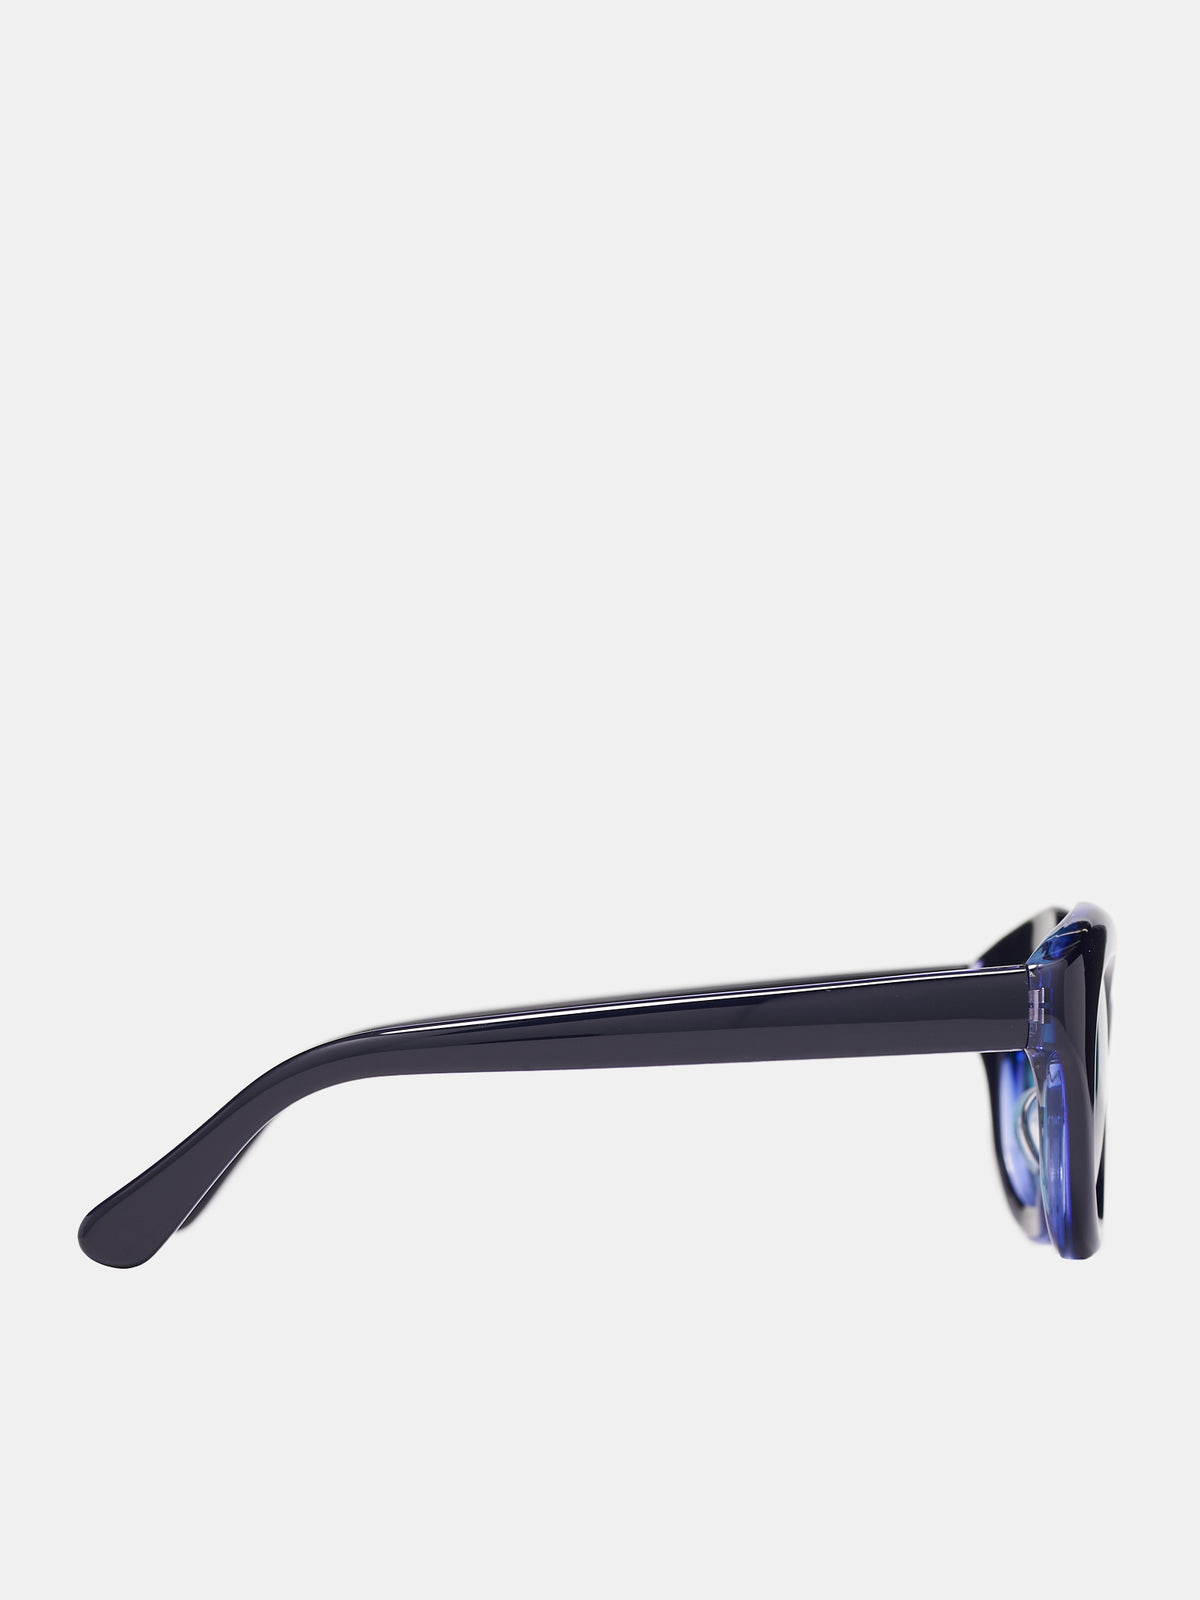 Hook Sunglasses (HOOK-MARINE-BLUEGREEN4)